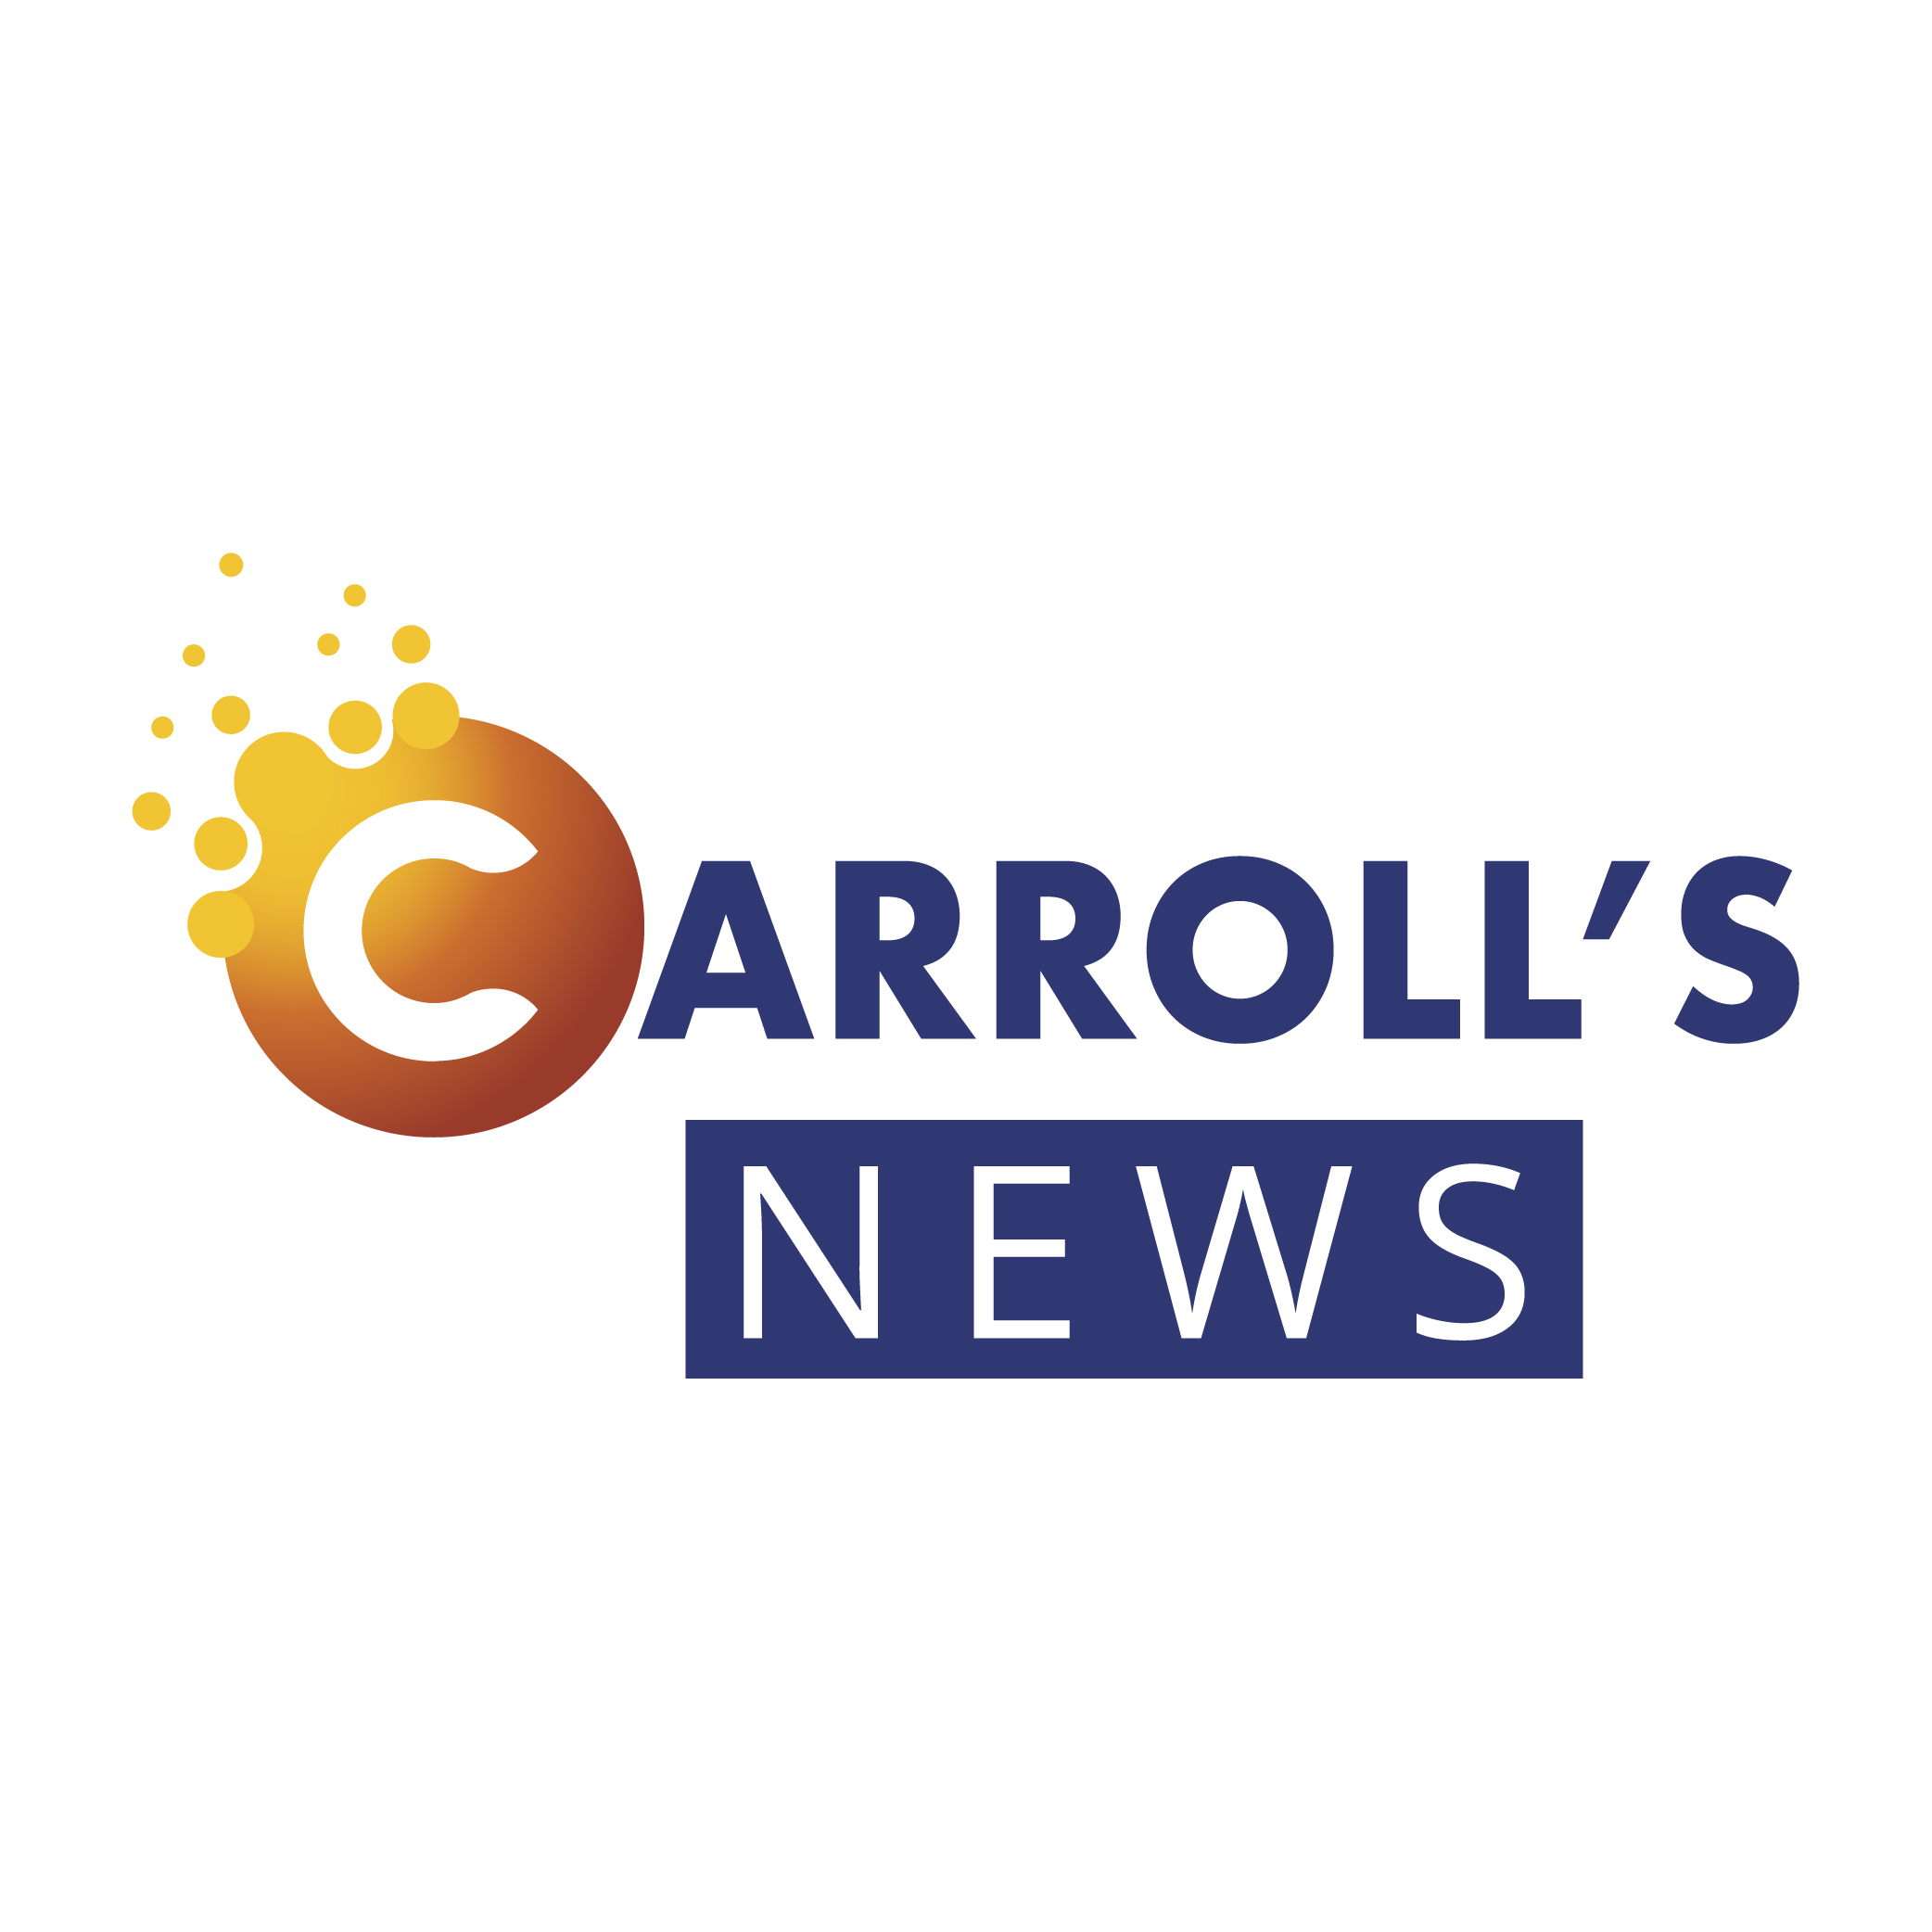 carrolls-news